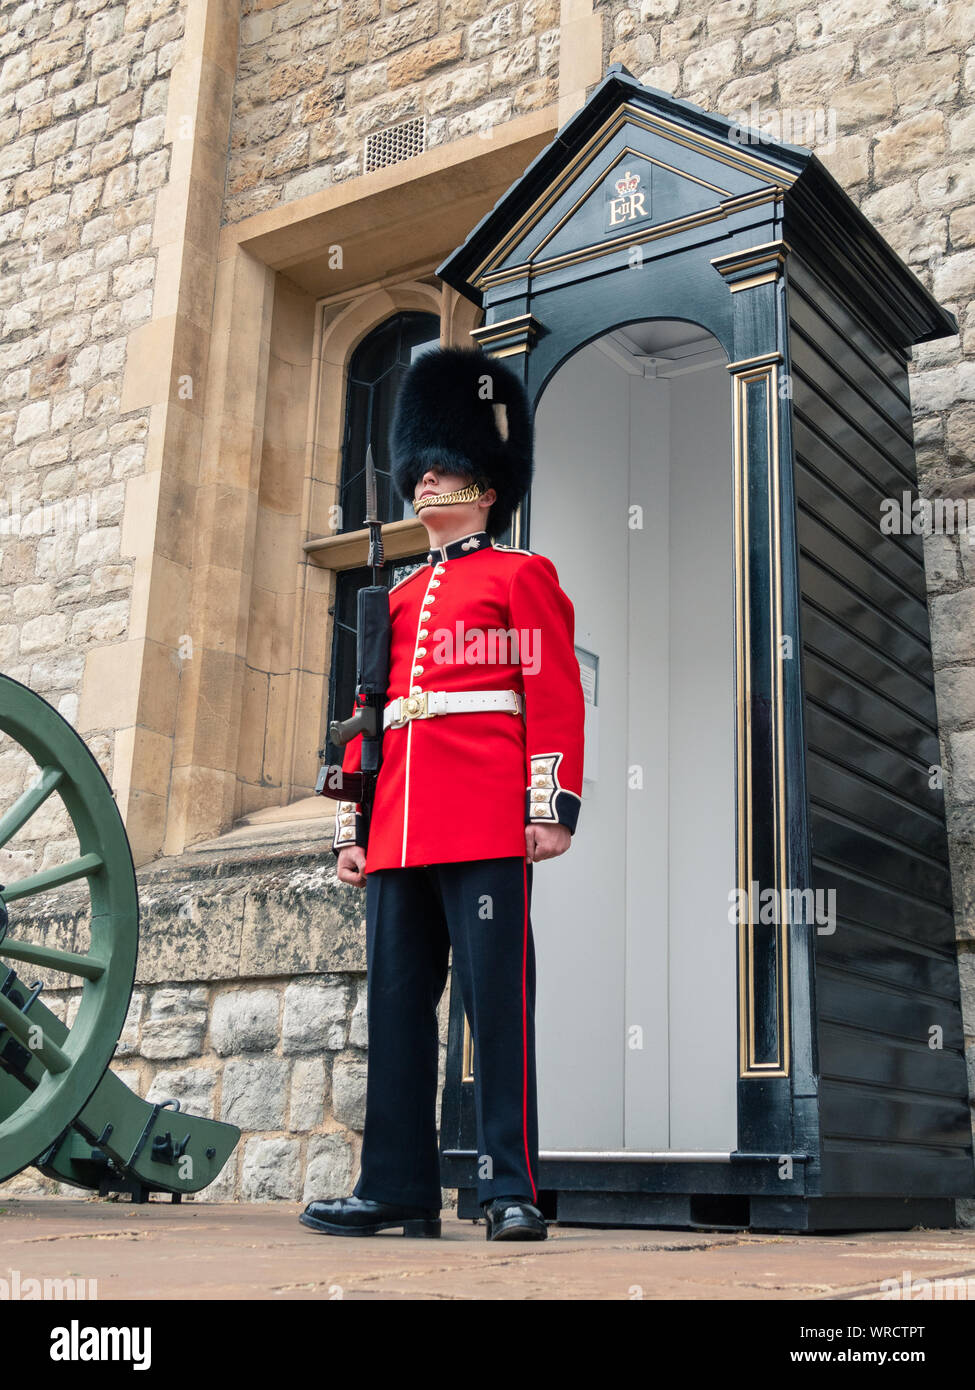 Buckingham Palace Guards Salary